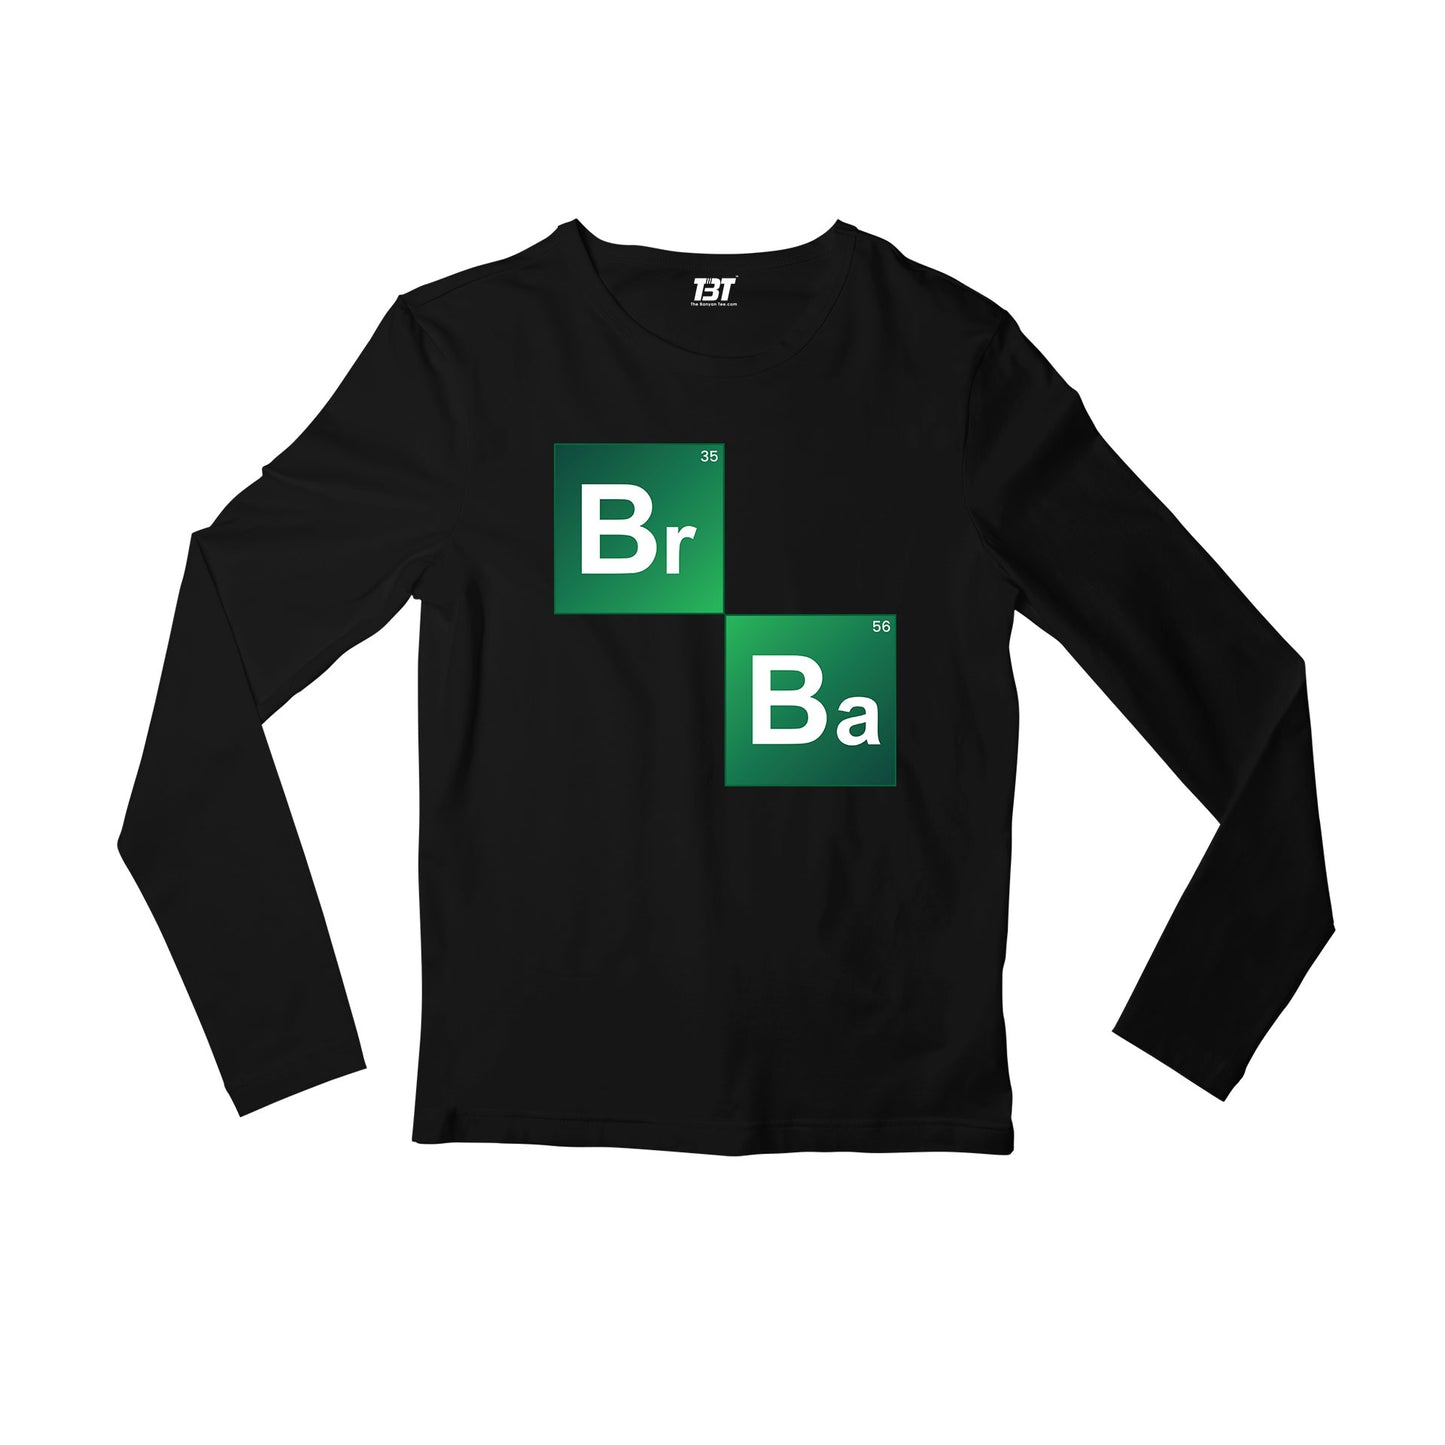 Breaking Bad Full Sleeves T shirt - Br-Ba